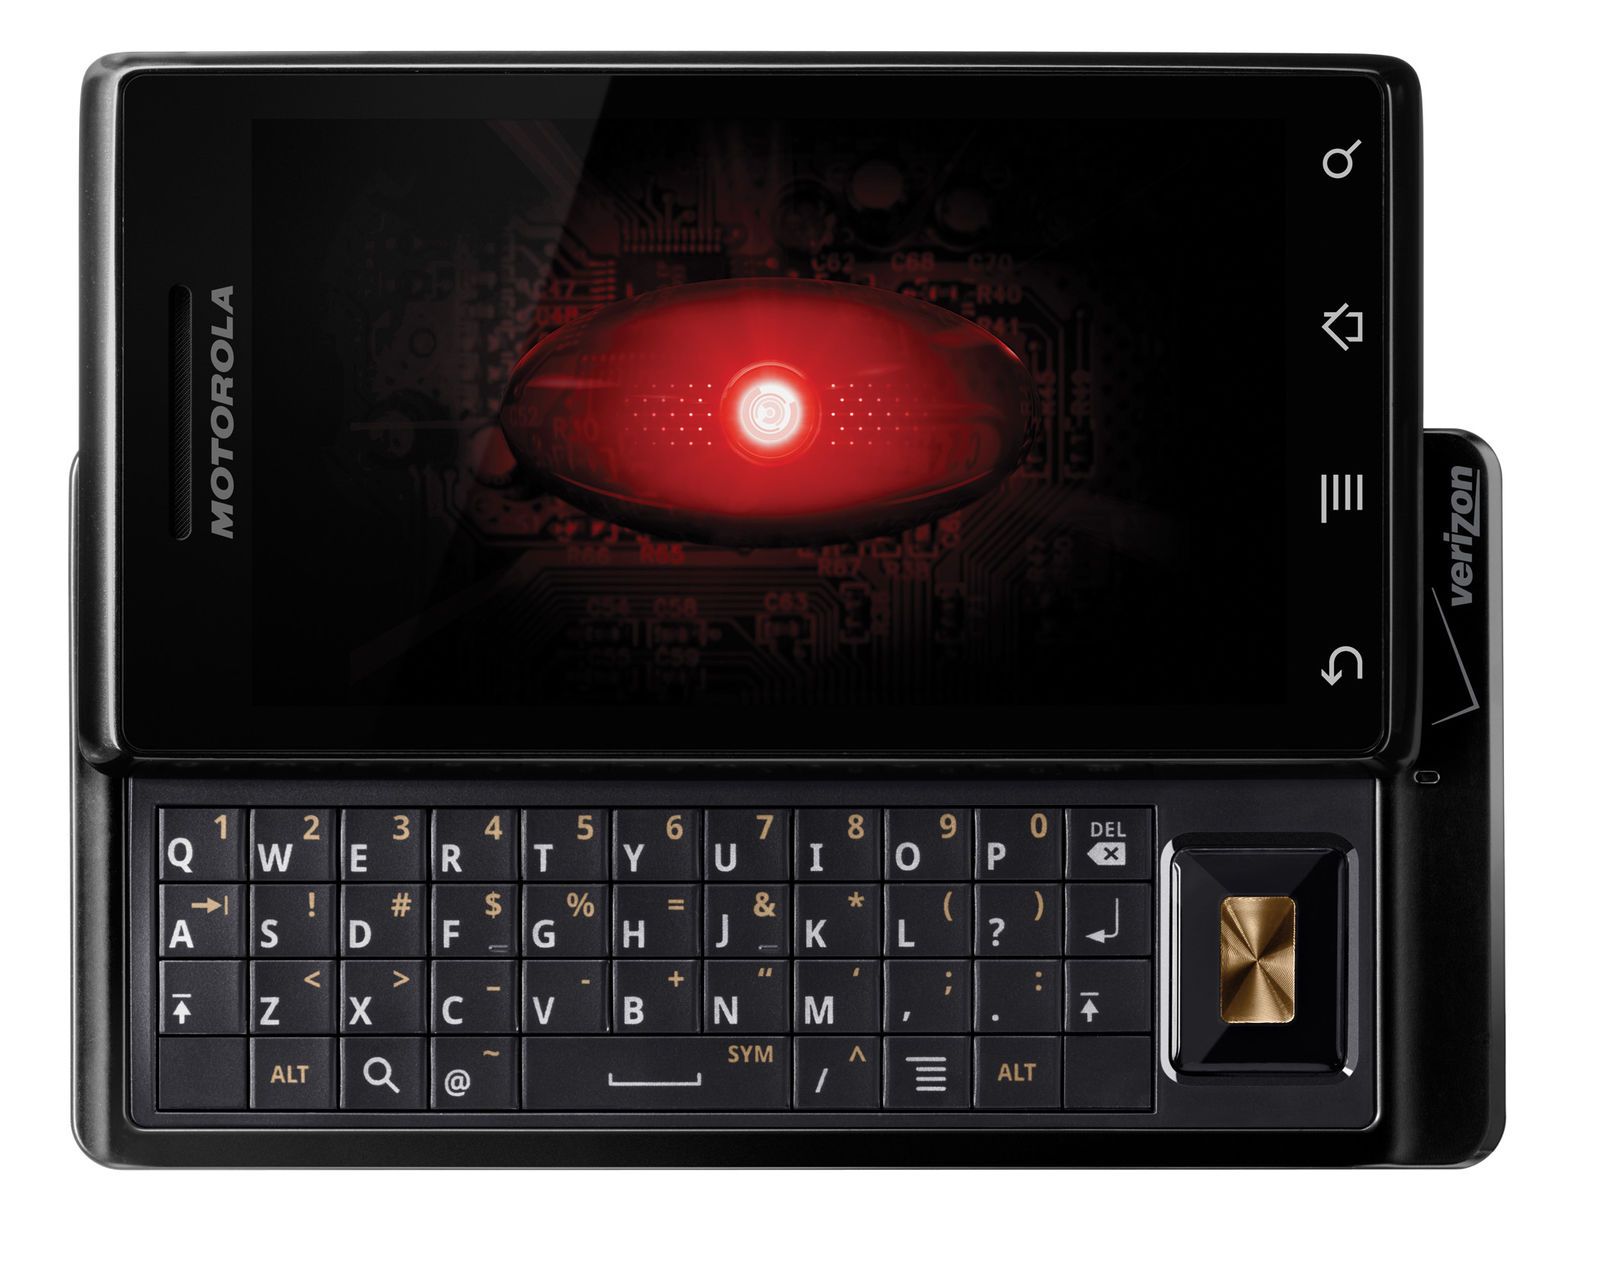 45 years of Motorola Phones image 25